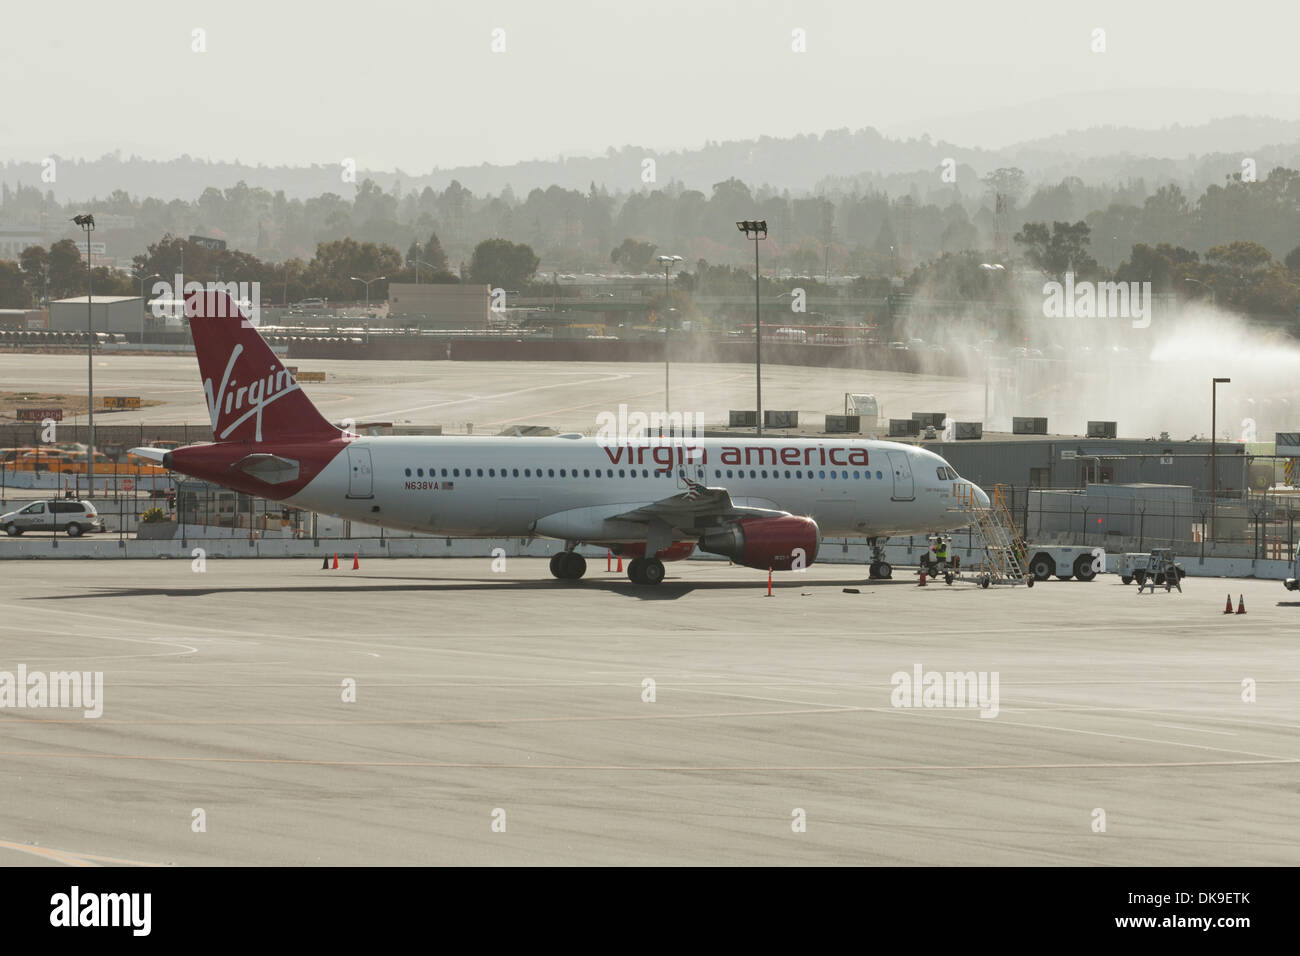 Virgin America Airline plane on tarmac - San Francisco International Airport, California USA Stock Photo